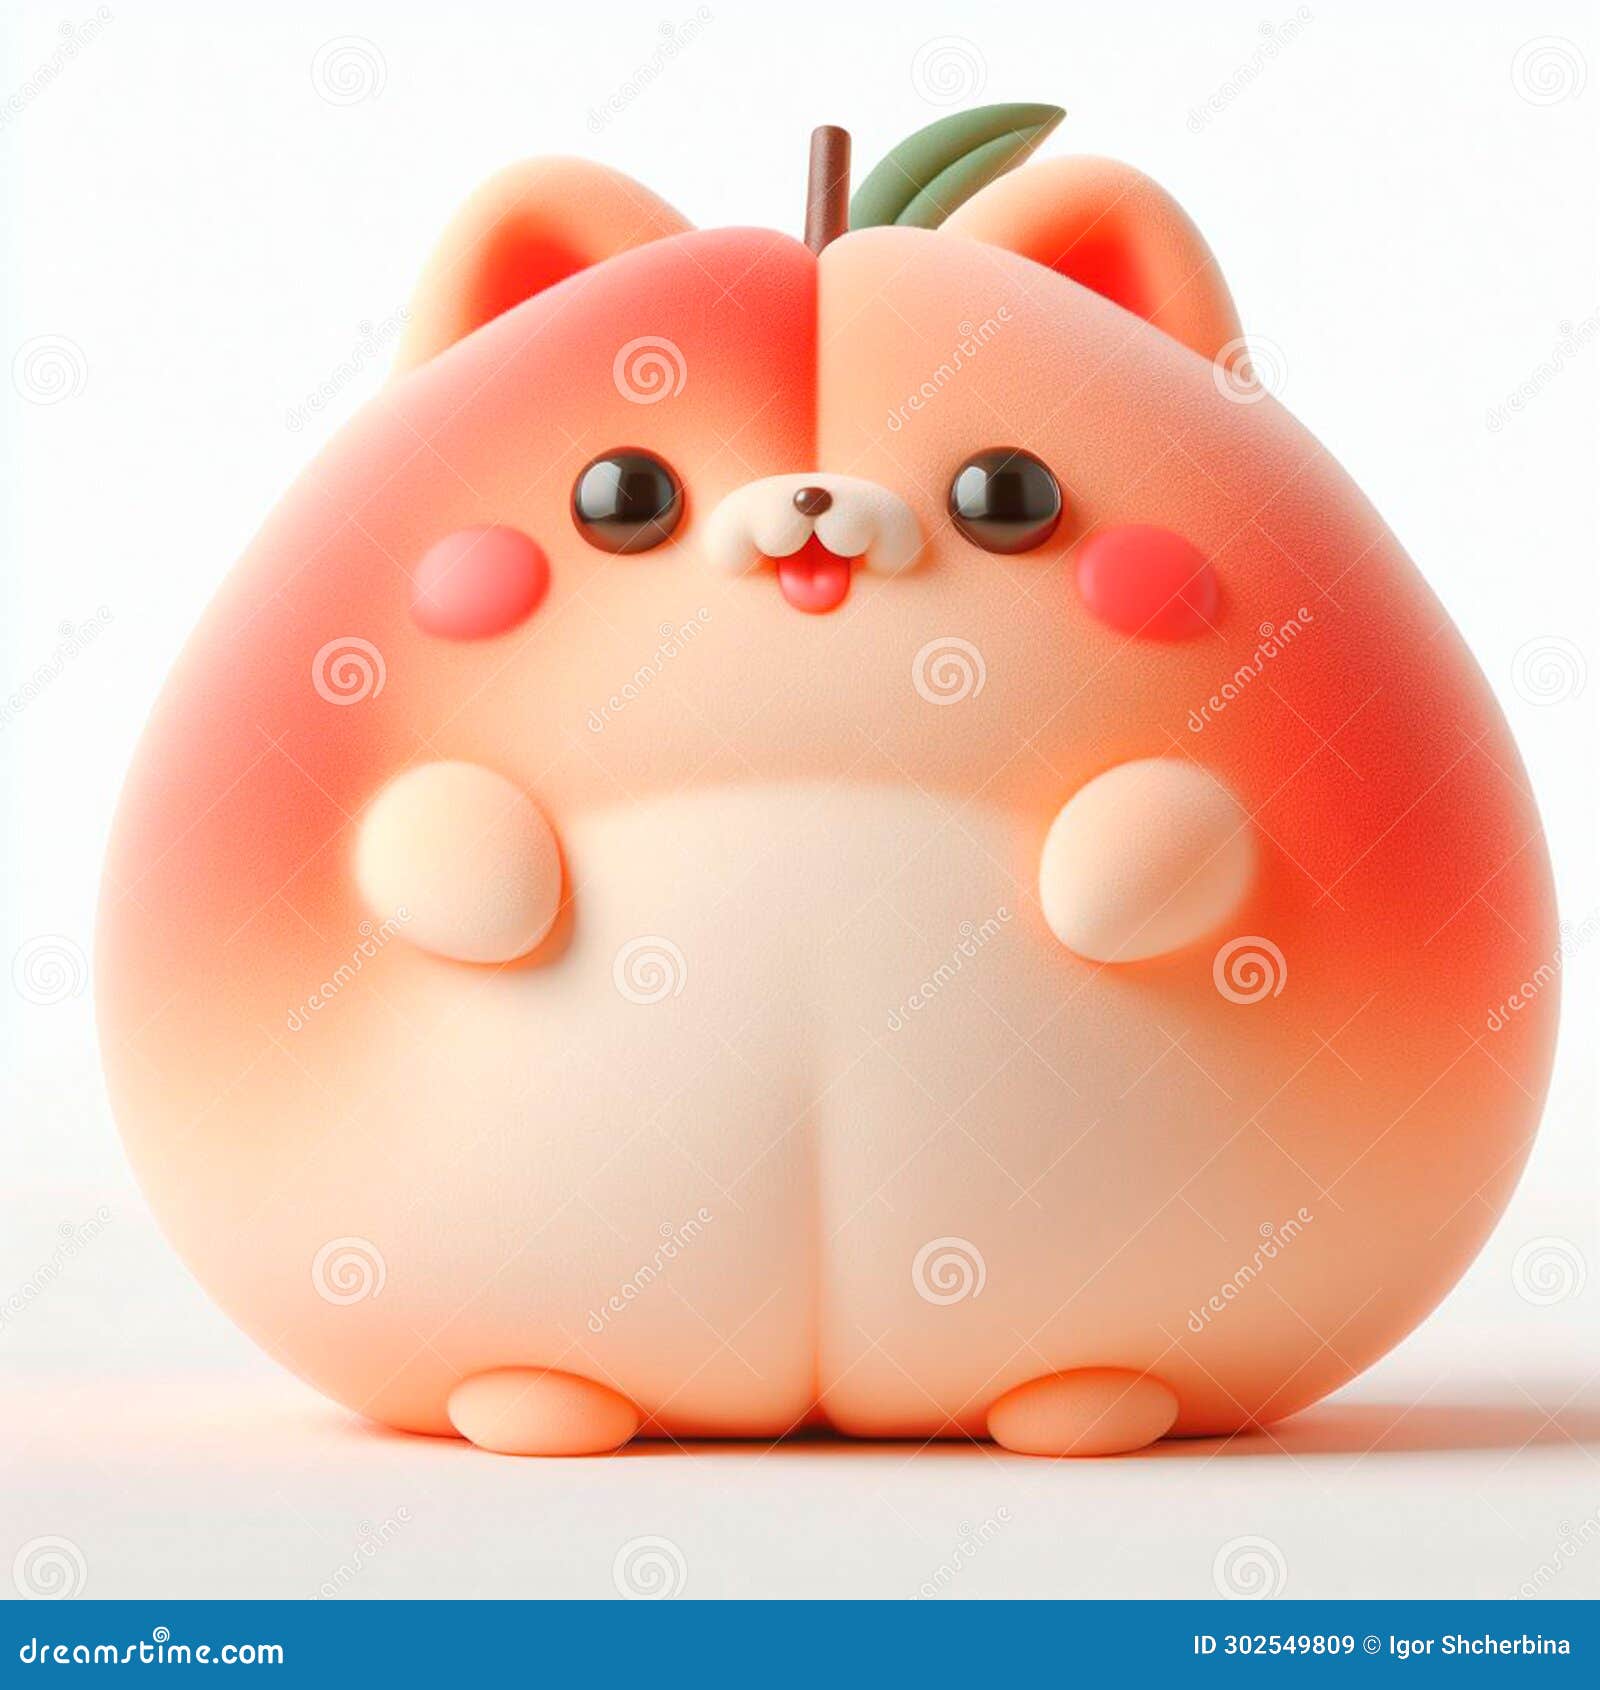 adorable-fat-peach-pet-d-rendering-302549809.jpg